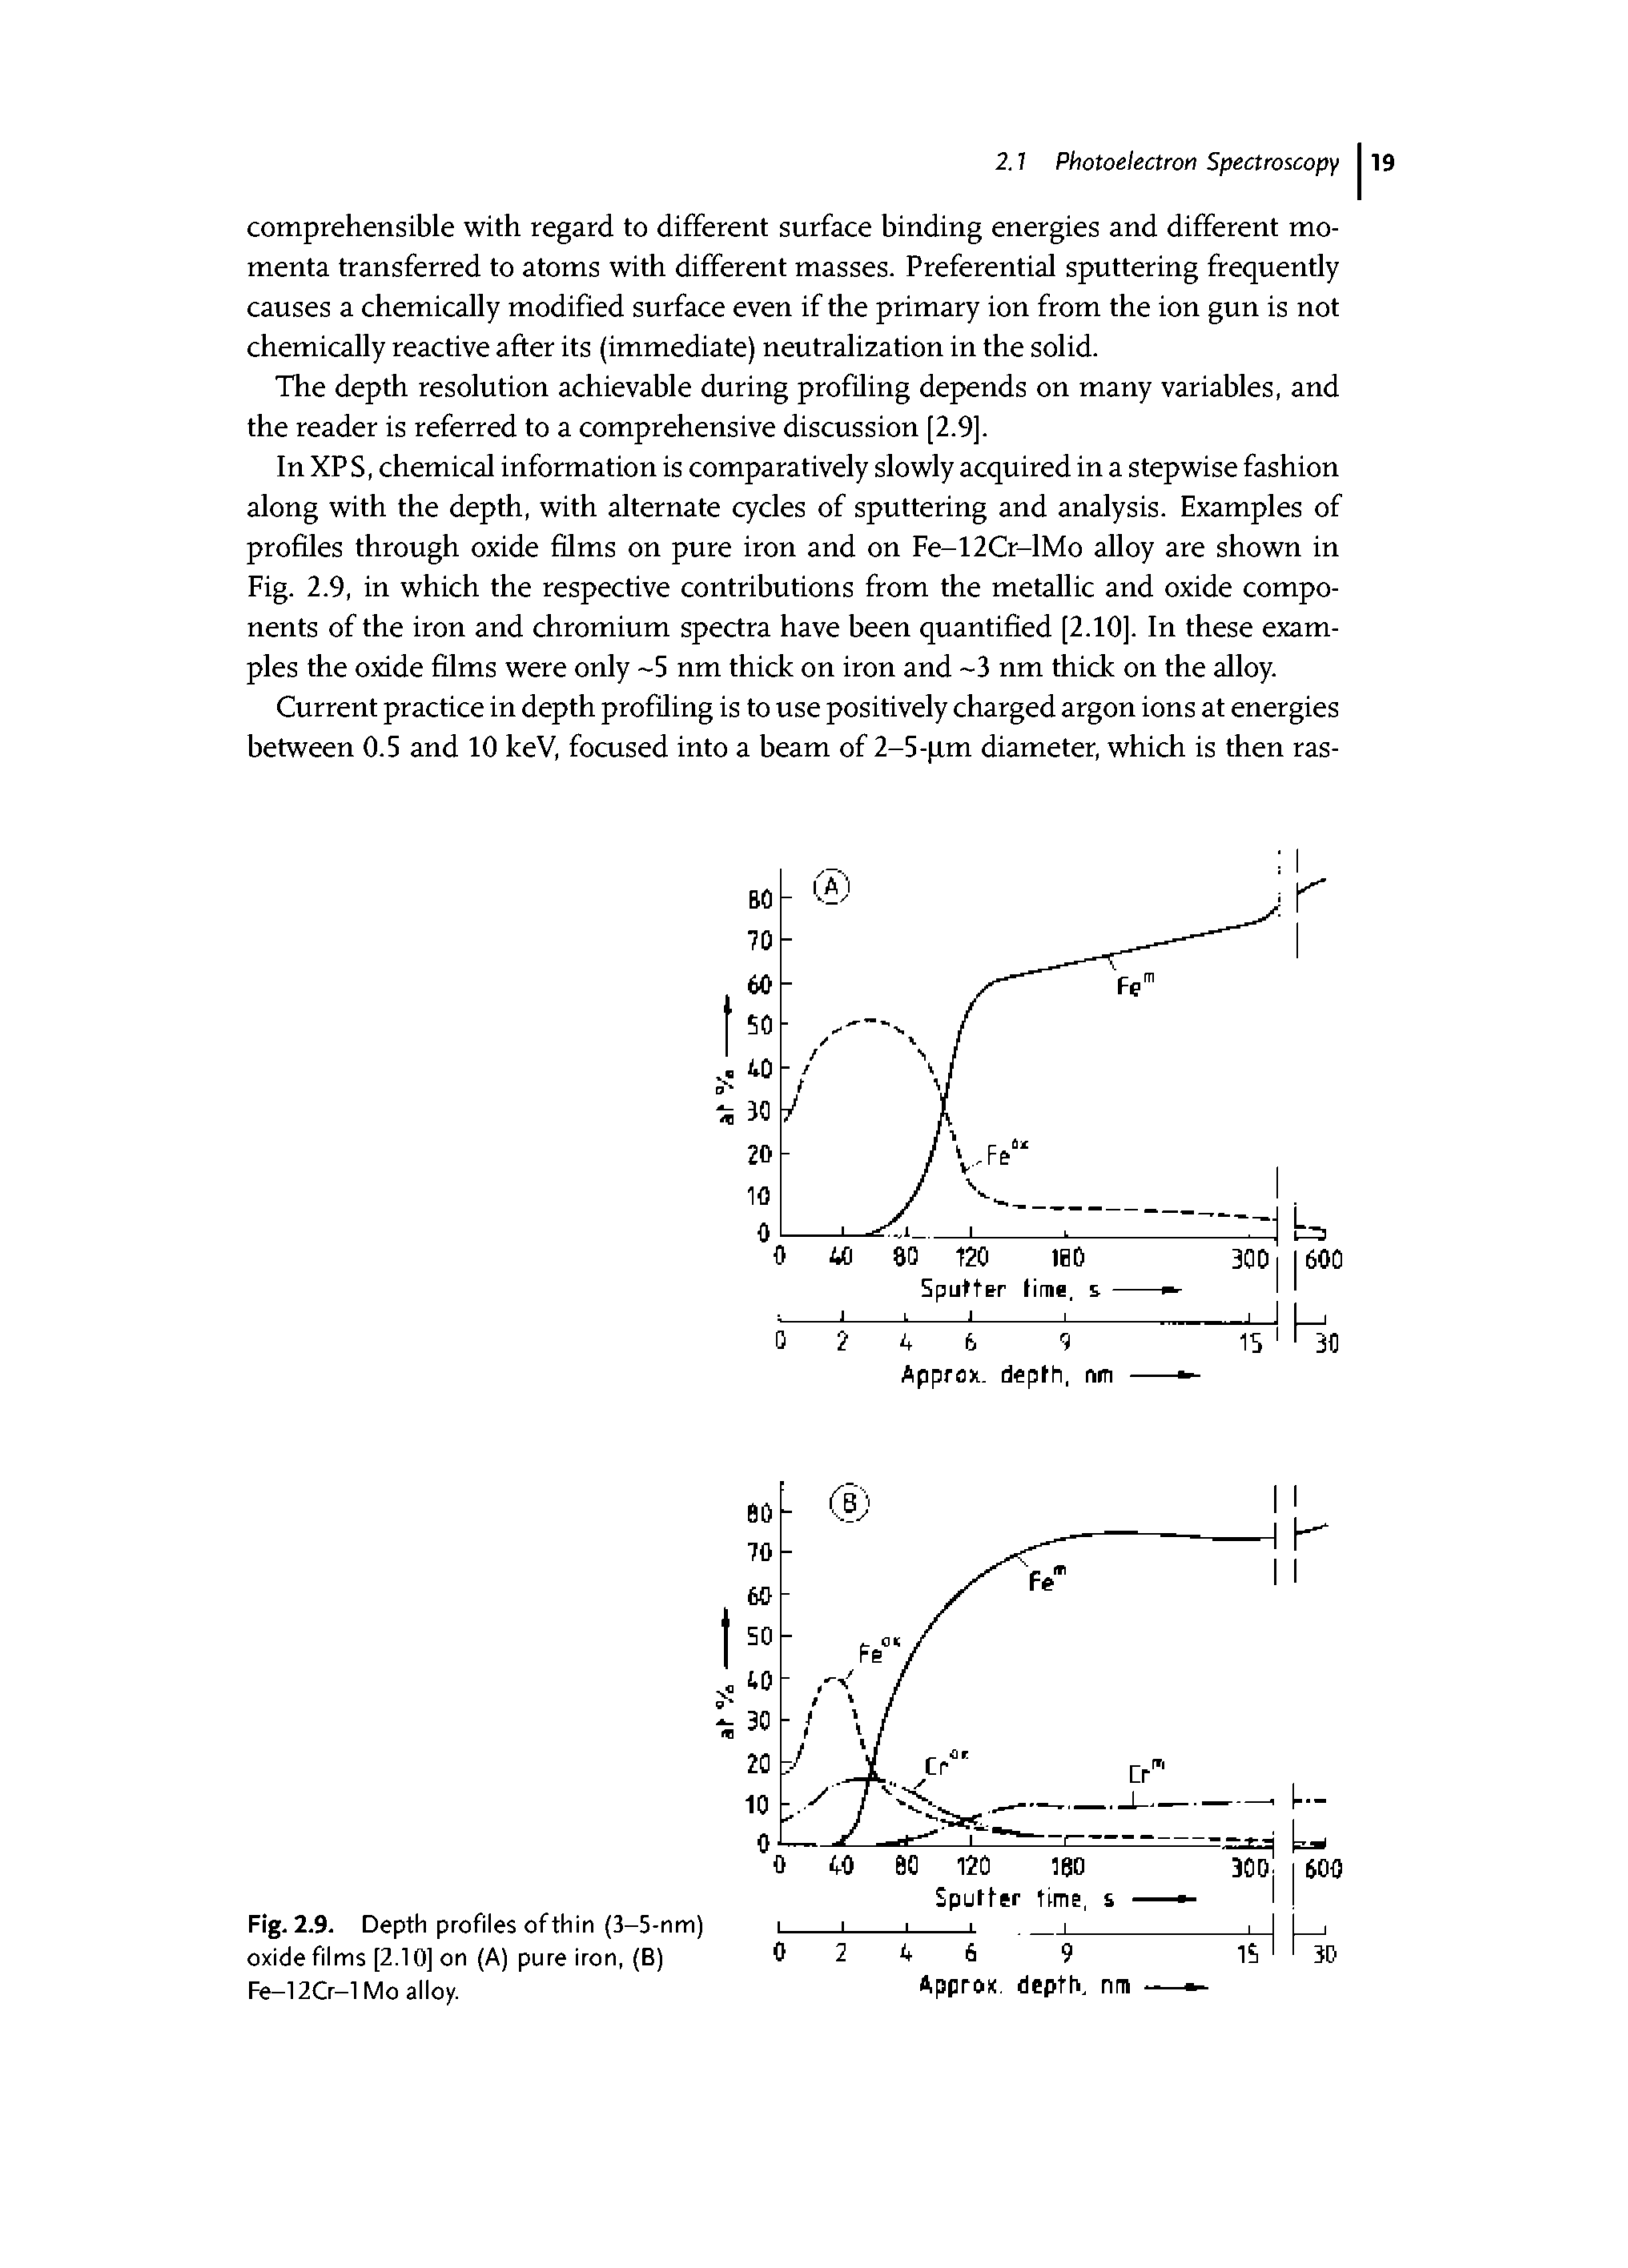 Fig. 2.9. Depth profiles ofthin (3-5-nm) oxide films [2.10] on (A) pure iron, (B) Fe-12Cr-l Mo alloy.